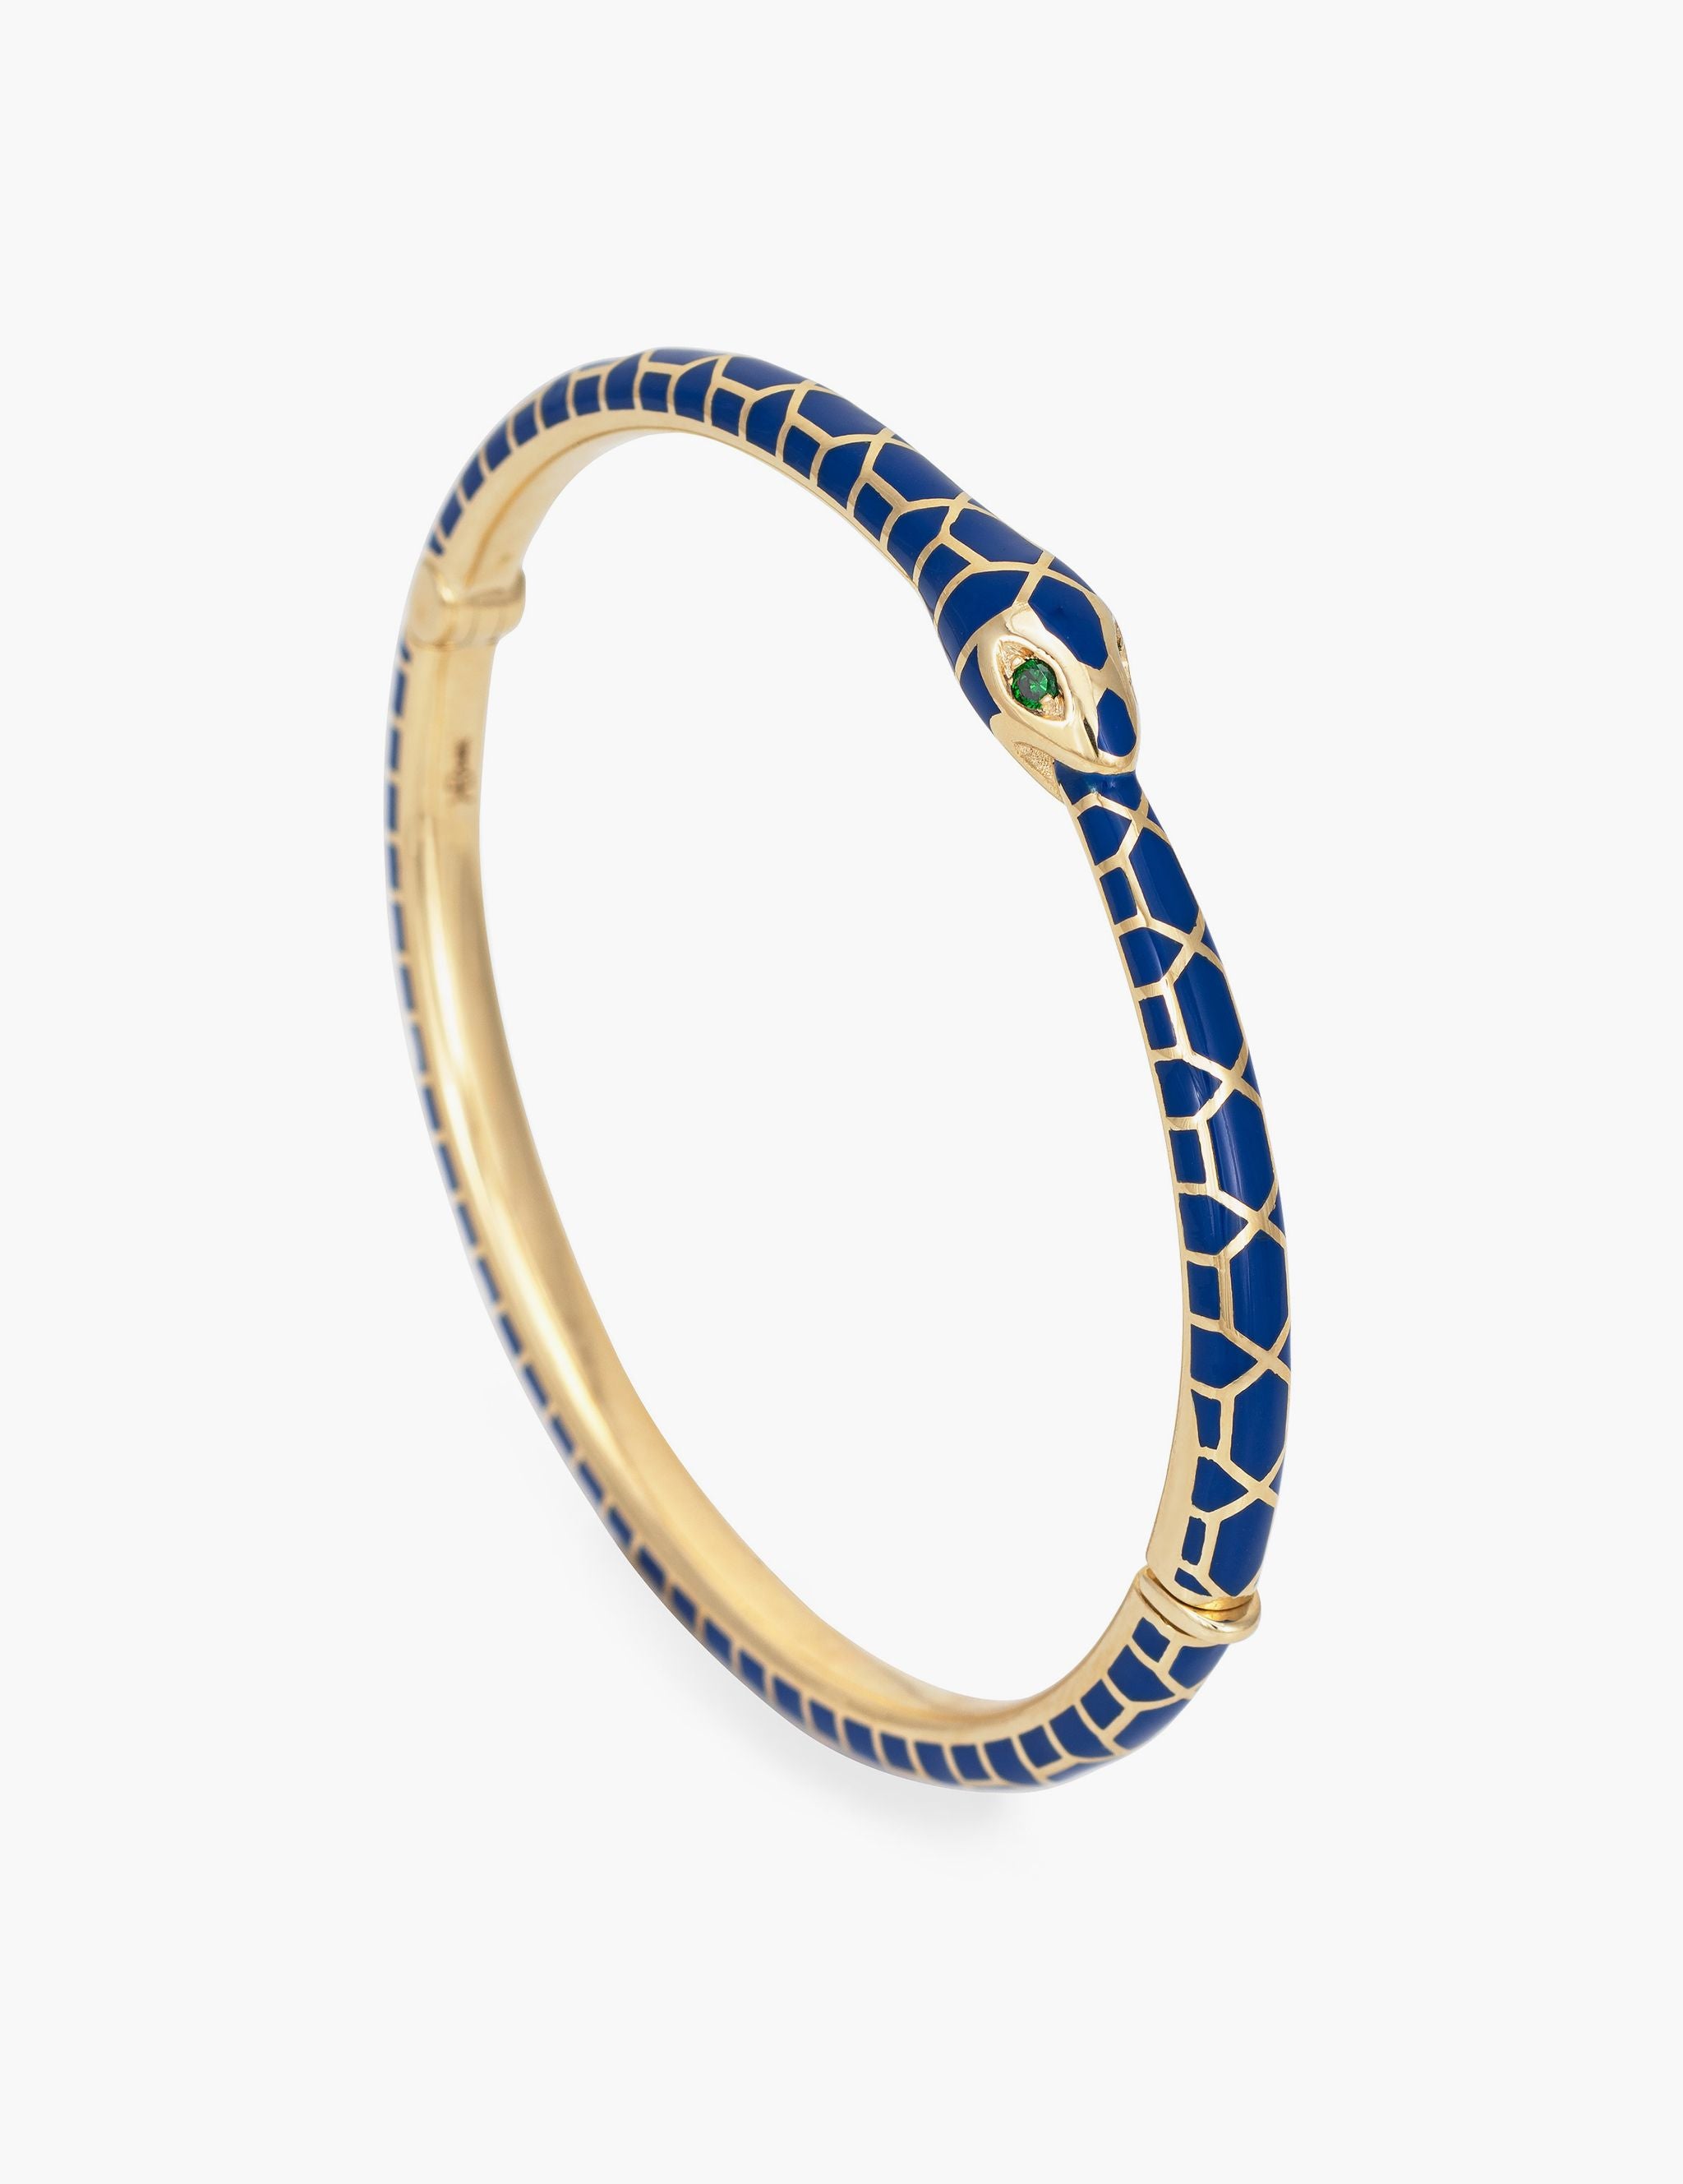 LV Padlock Bracelet Other Leathers - Fashion Jewelry | LOUIS VUITTON